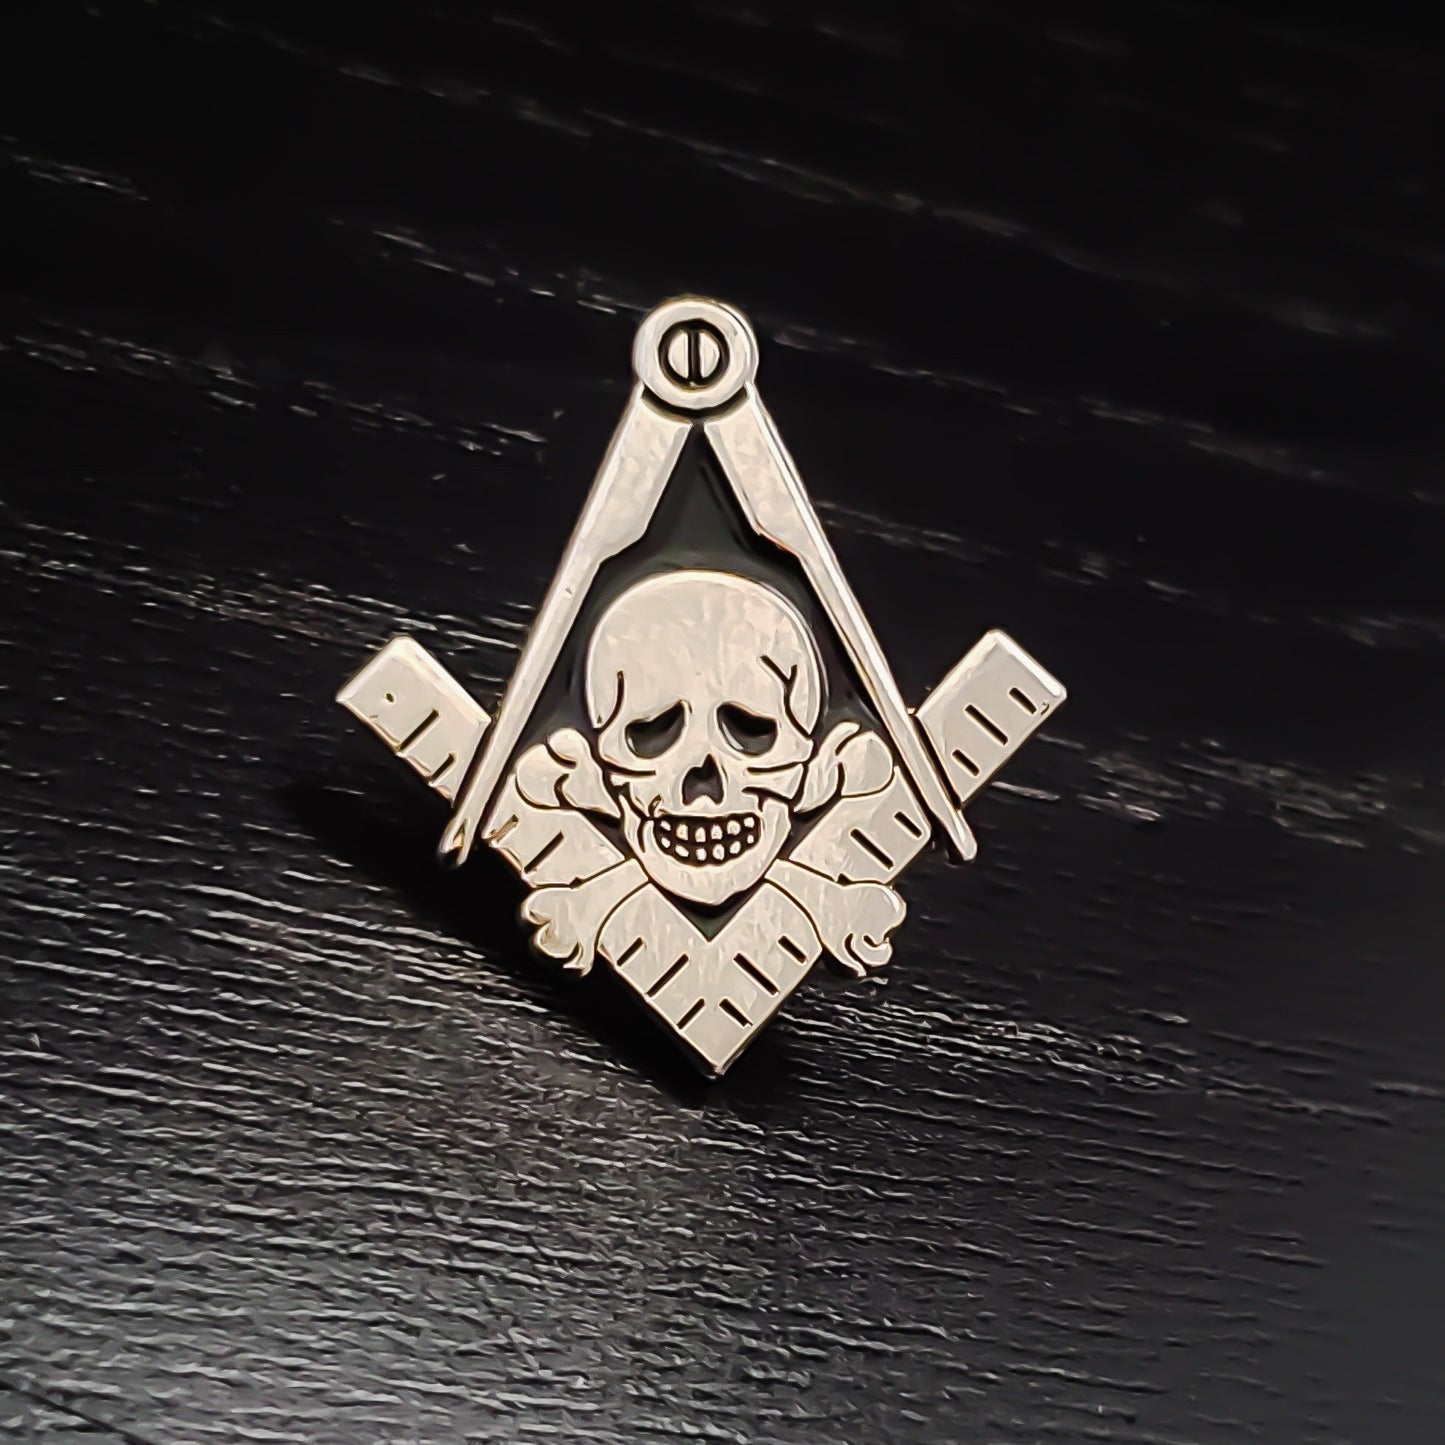 Memento Mori Masonic Skull Lapel Pin Silver/Black Masonic Pin